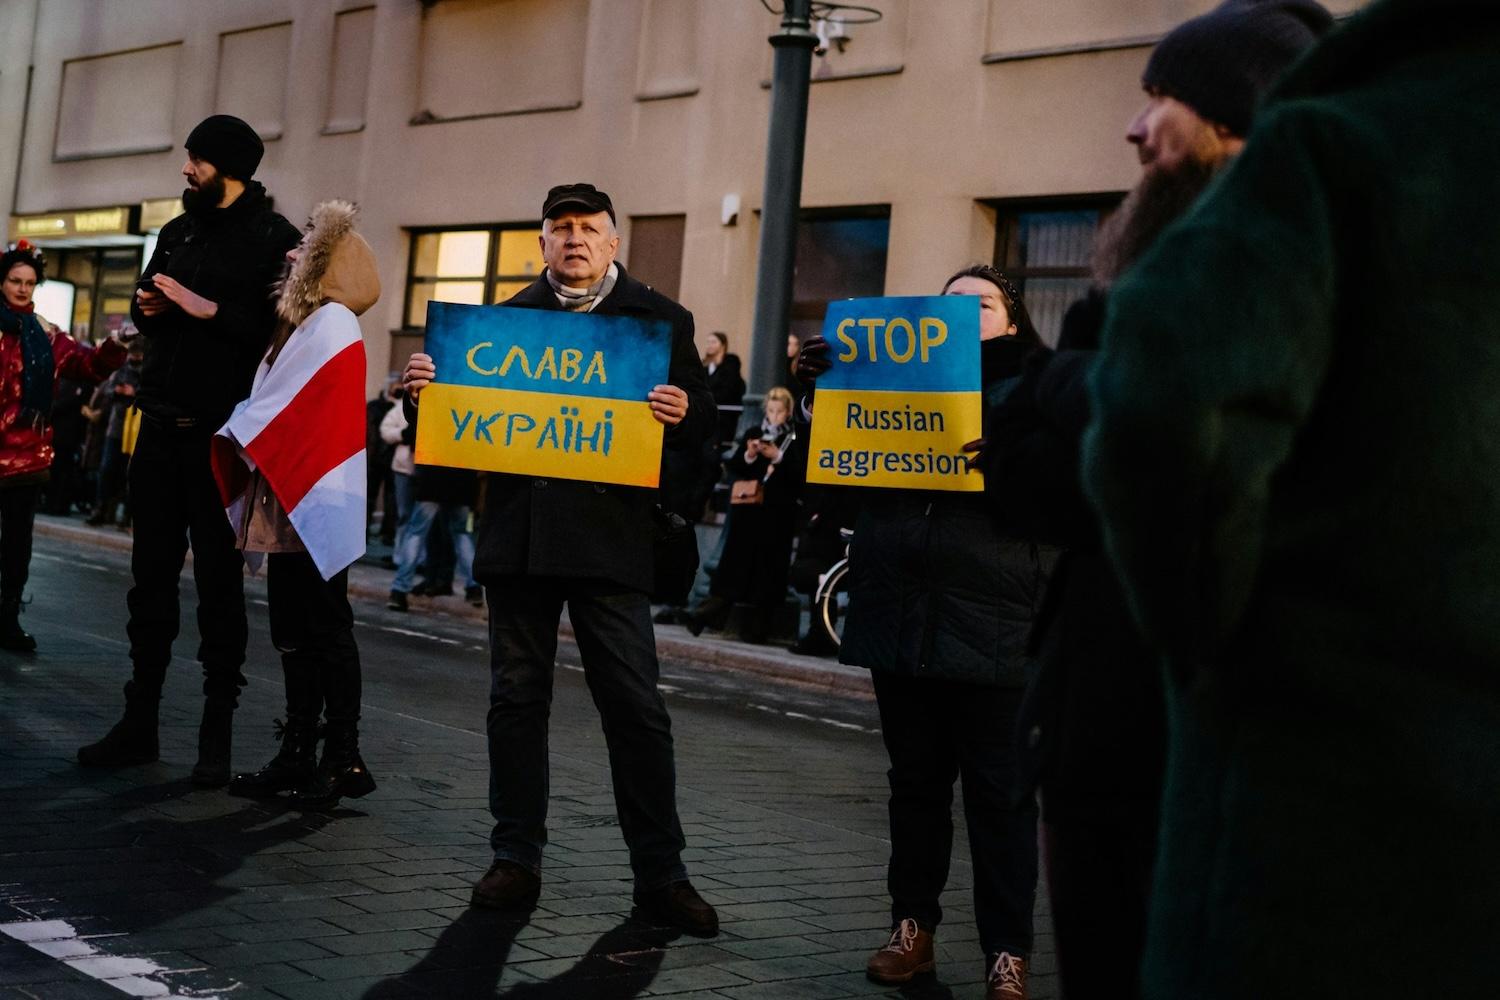 romanian protestors oppose russia invasion of ukraine in 2022